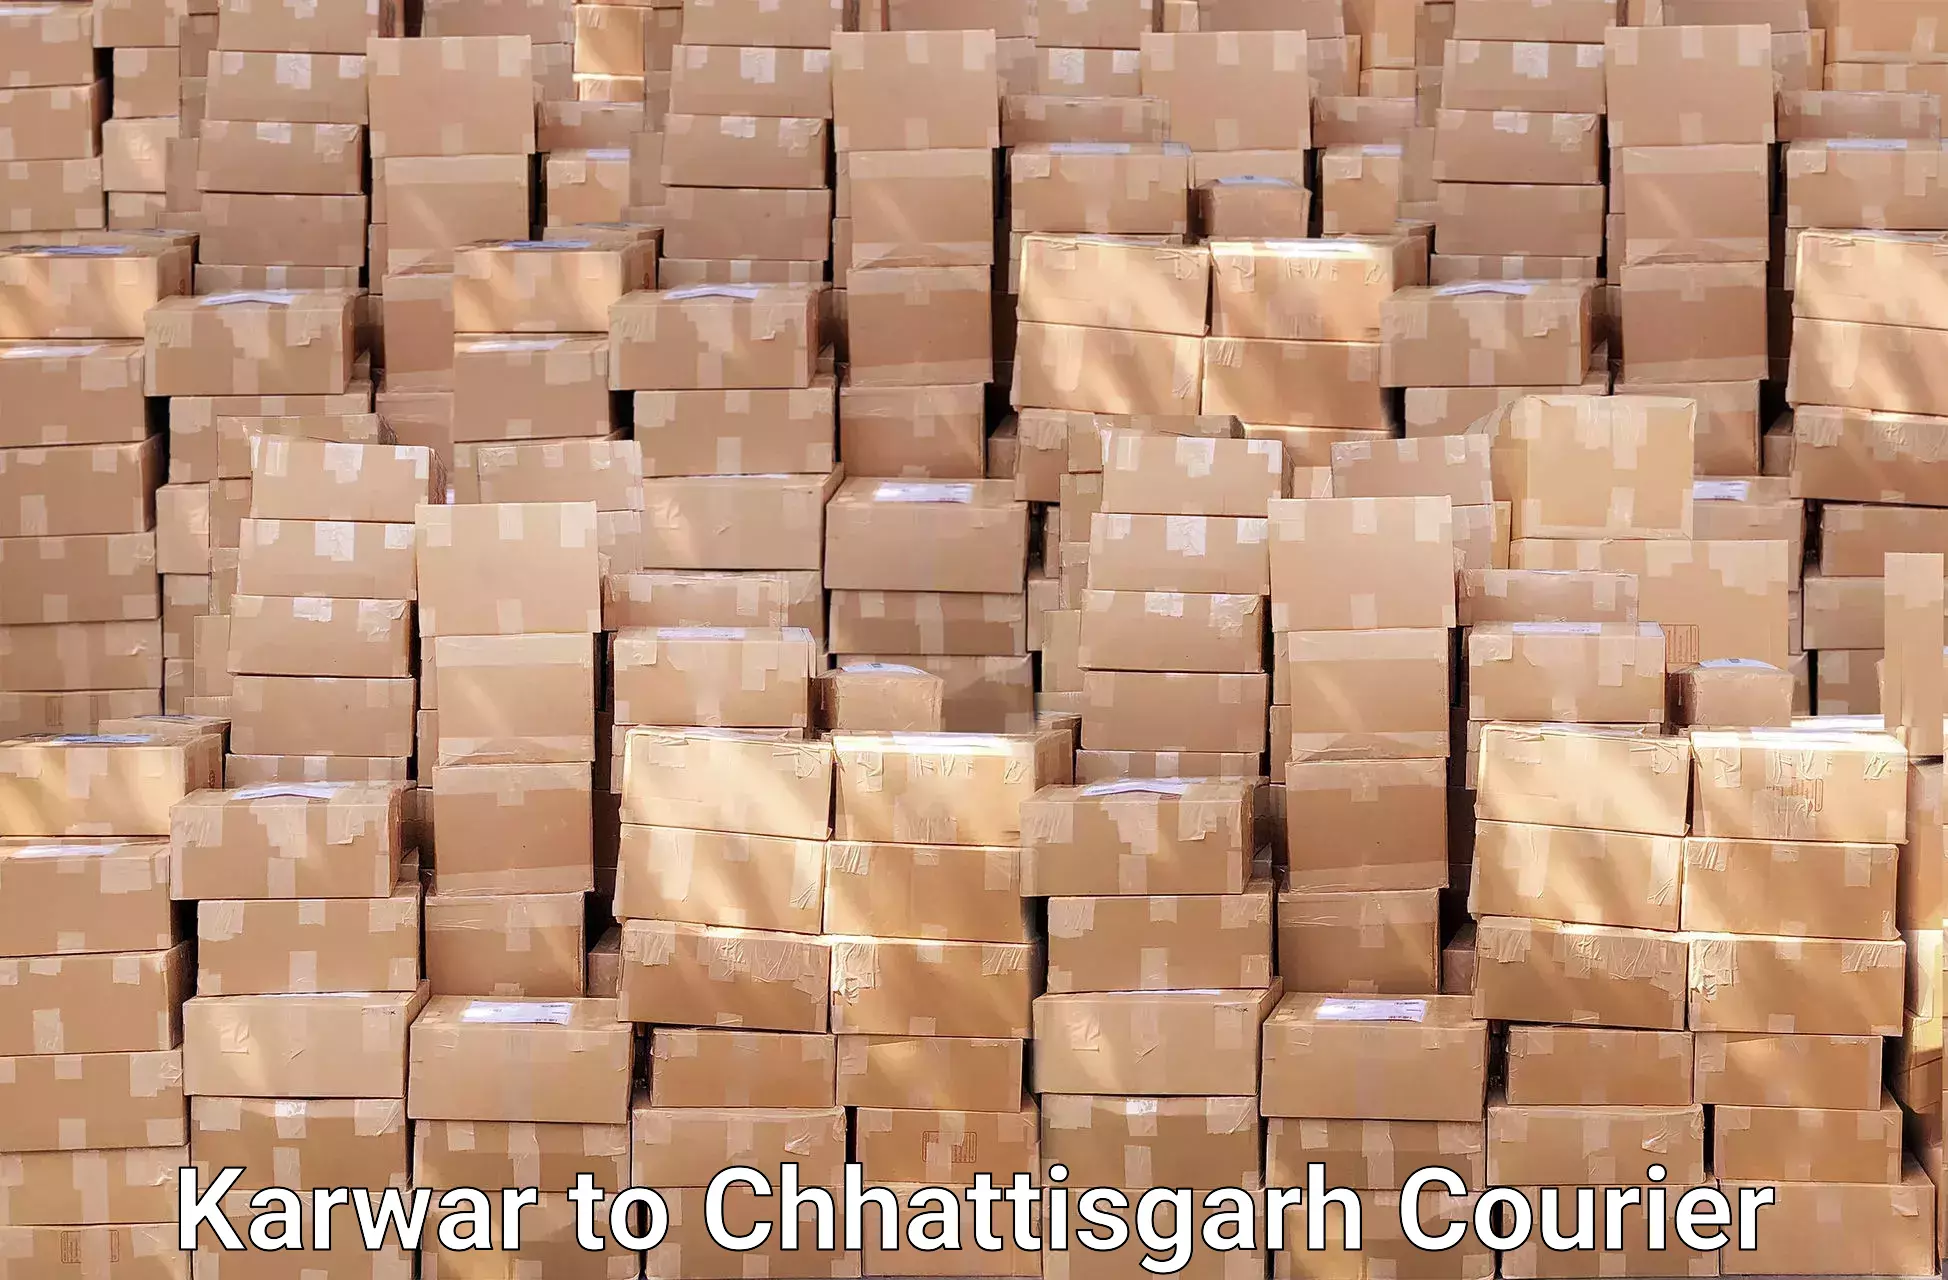 Efficient packing and moving Karwar to Bastar